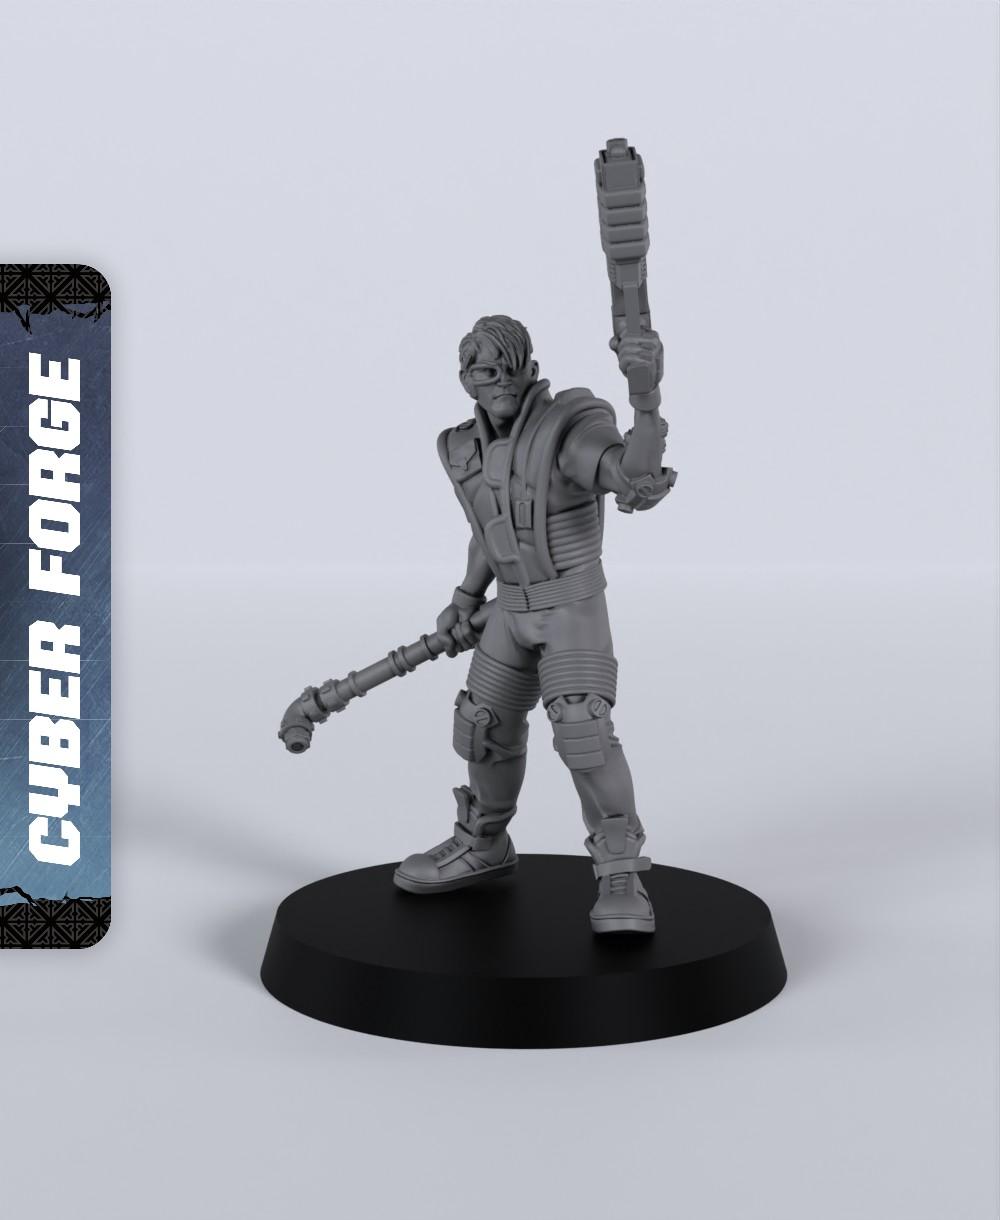 Matt the Hacker - With Free Cyberpunk Warhammer - 40k Sci-Fi Gift Ideas for RPG and Wargamers 3d model